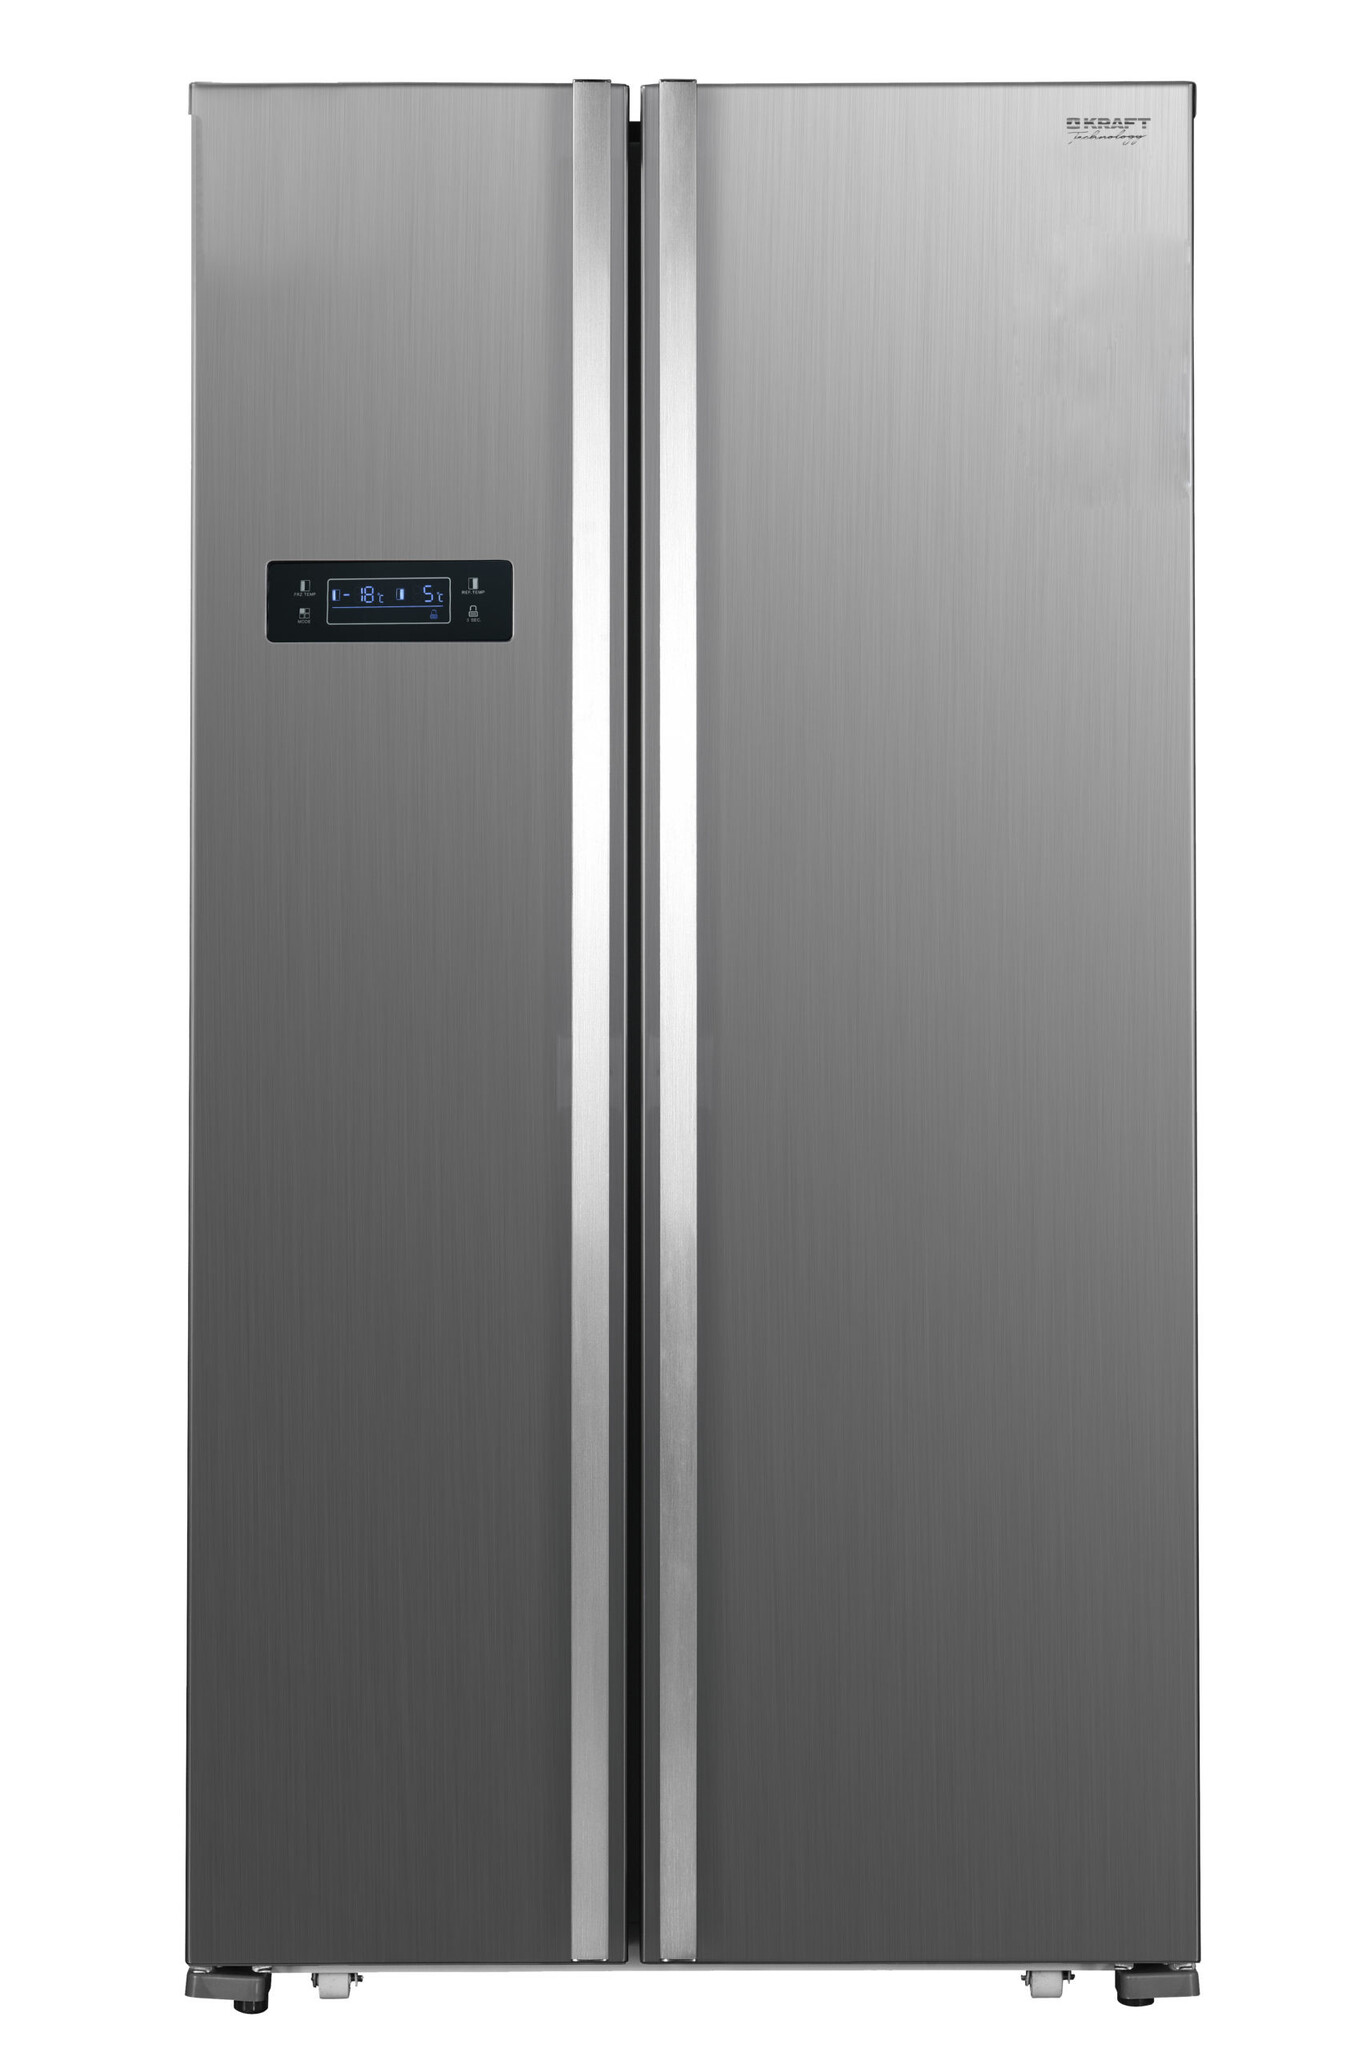 Интернет озон холодильники. Холодильник Side by Side Kraft KF-ms2480x. Холодильник Side by Side Winia rsm580bsw. Холодильник Shivaki SBS-530dnfx. Холодильник Beko Side by Side.